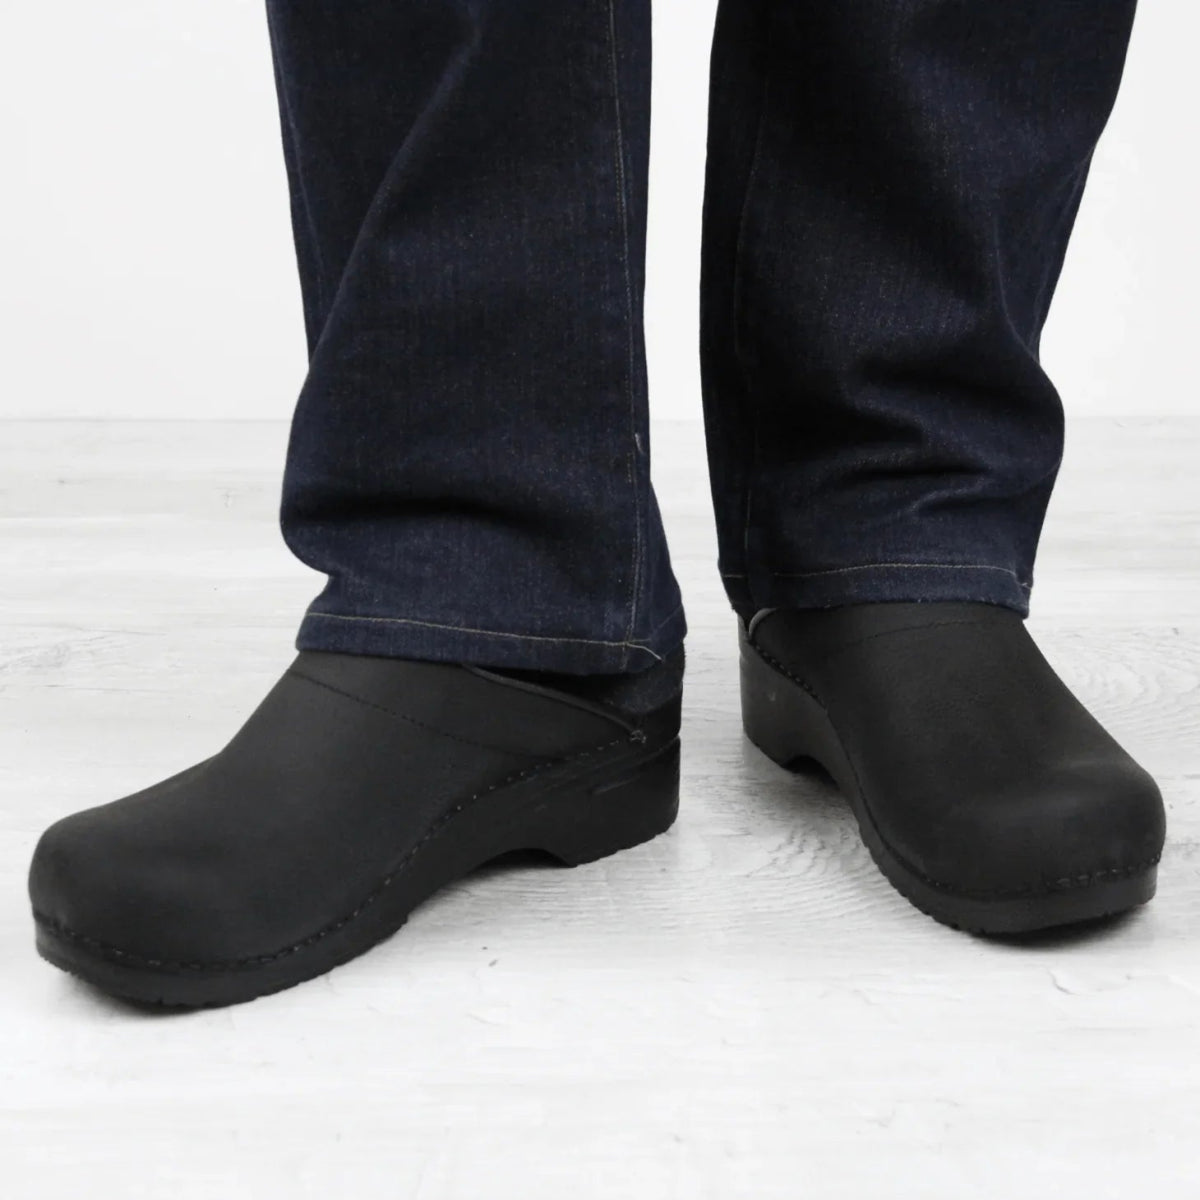 SANITA KARL TEXTURED OIL PROFESSIONAL MEN CLOG IN BLACK - TLW Shoes